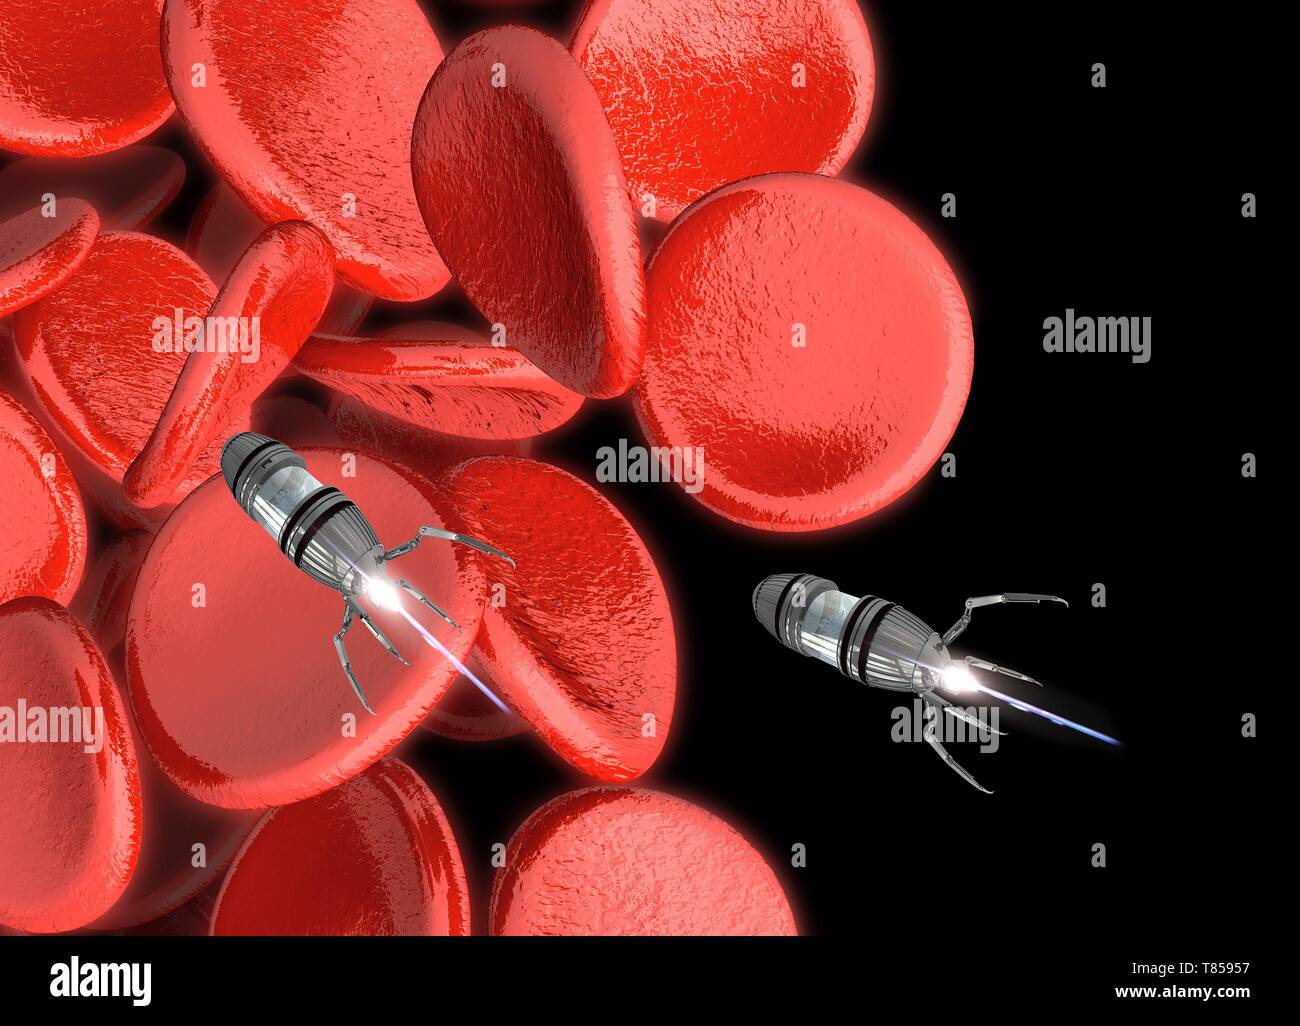 Nanobots in bloodstream, illustration Stock Photo